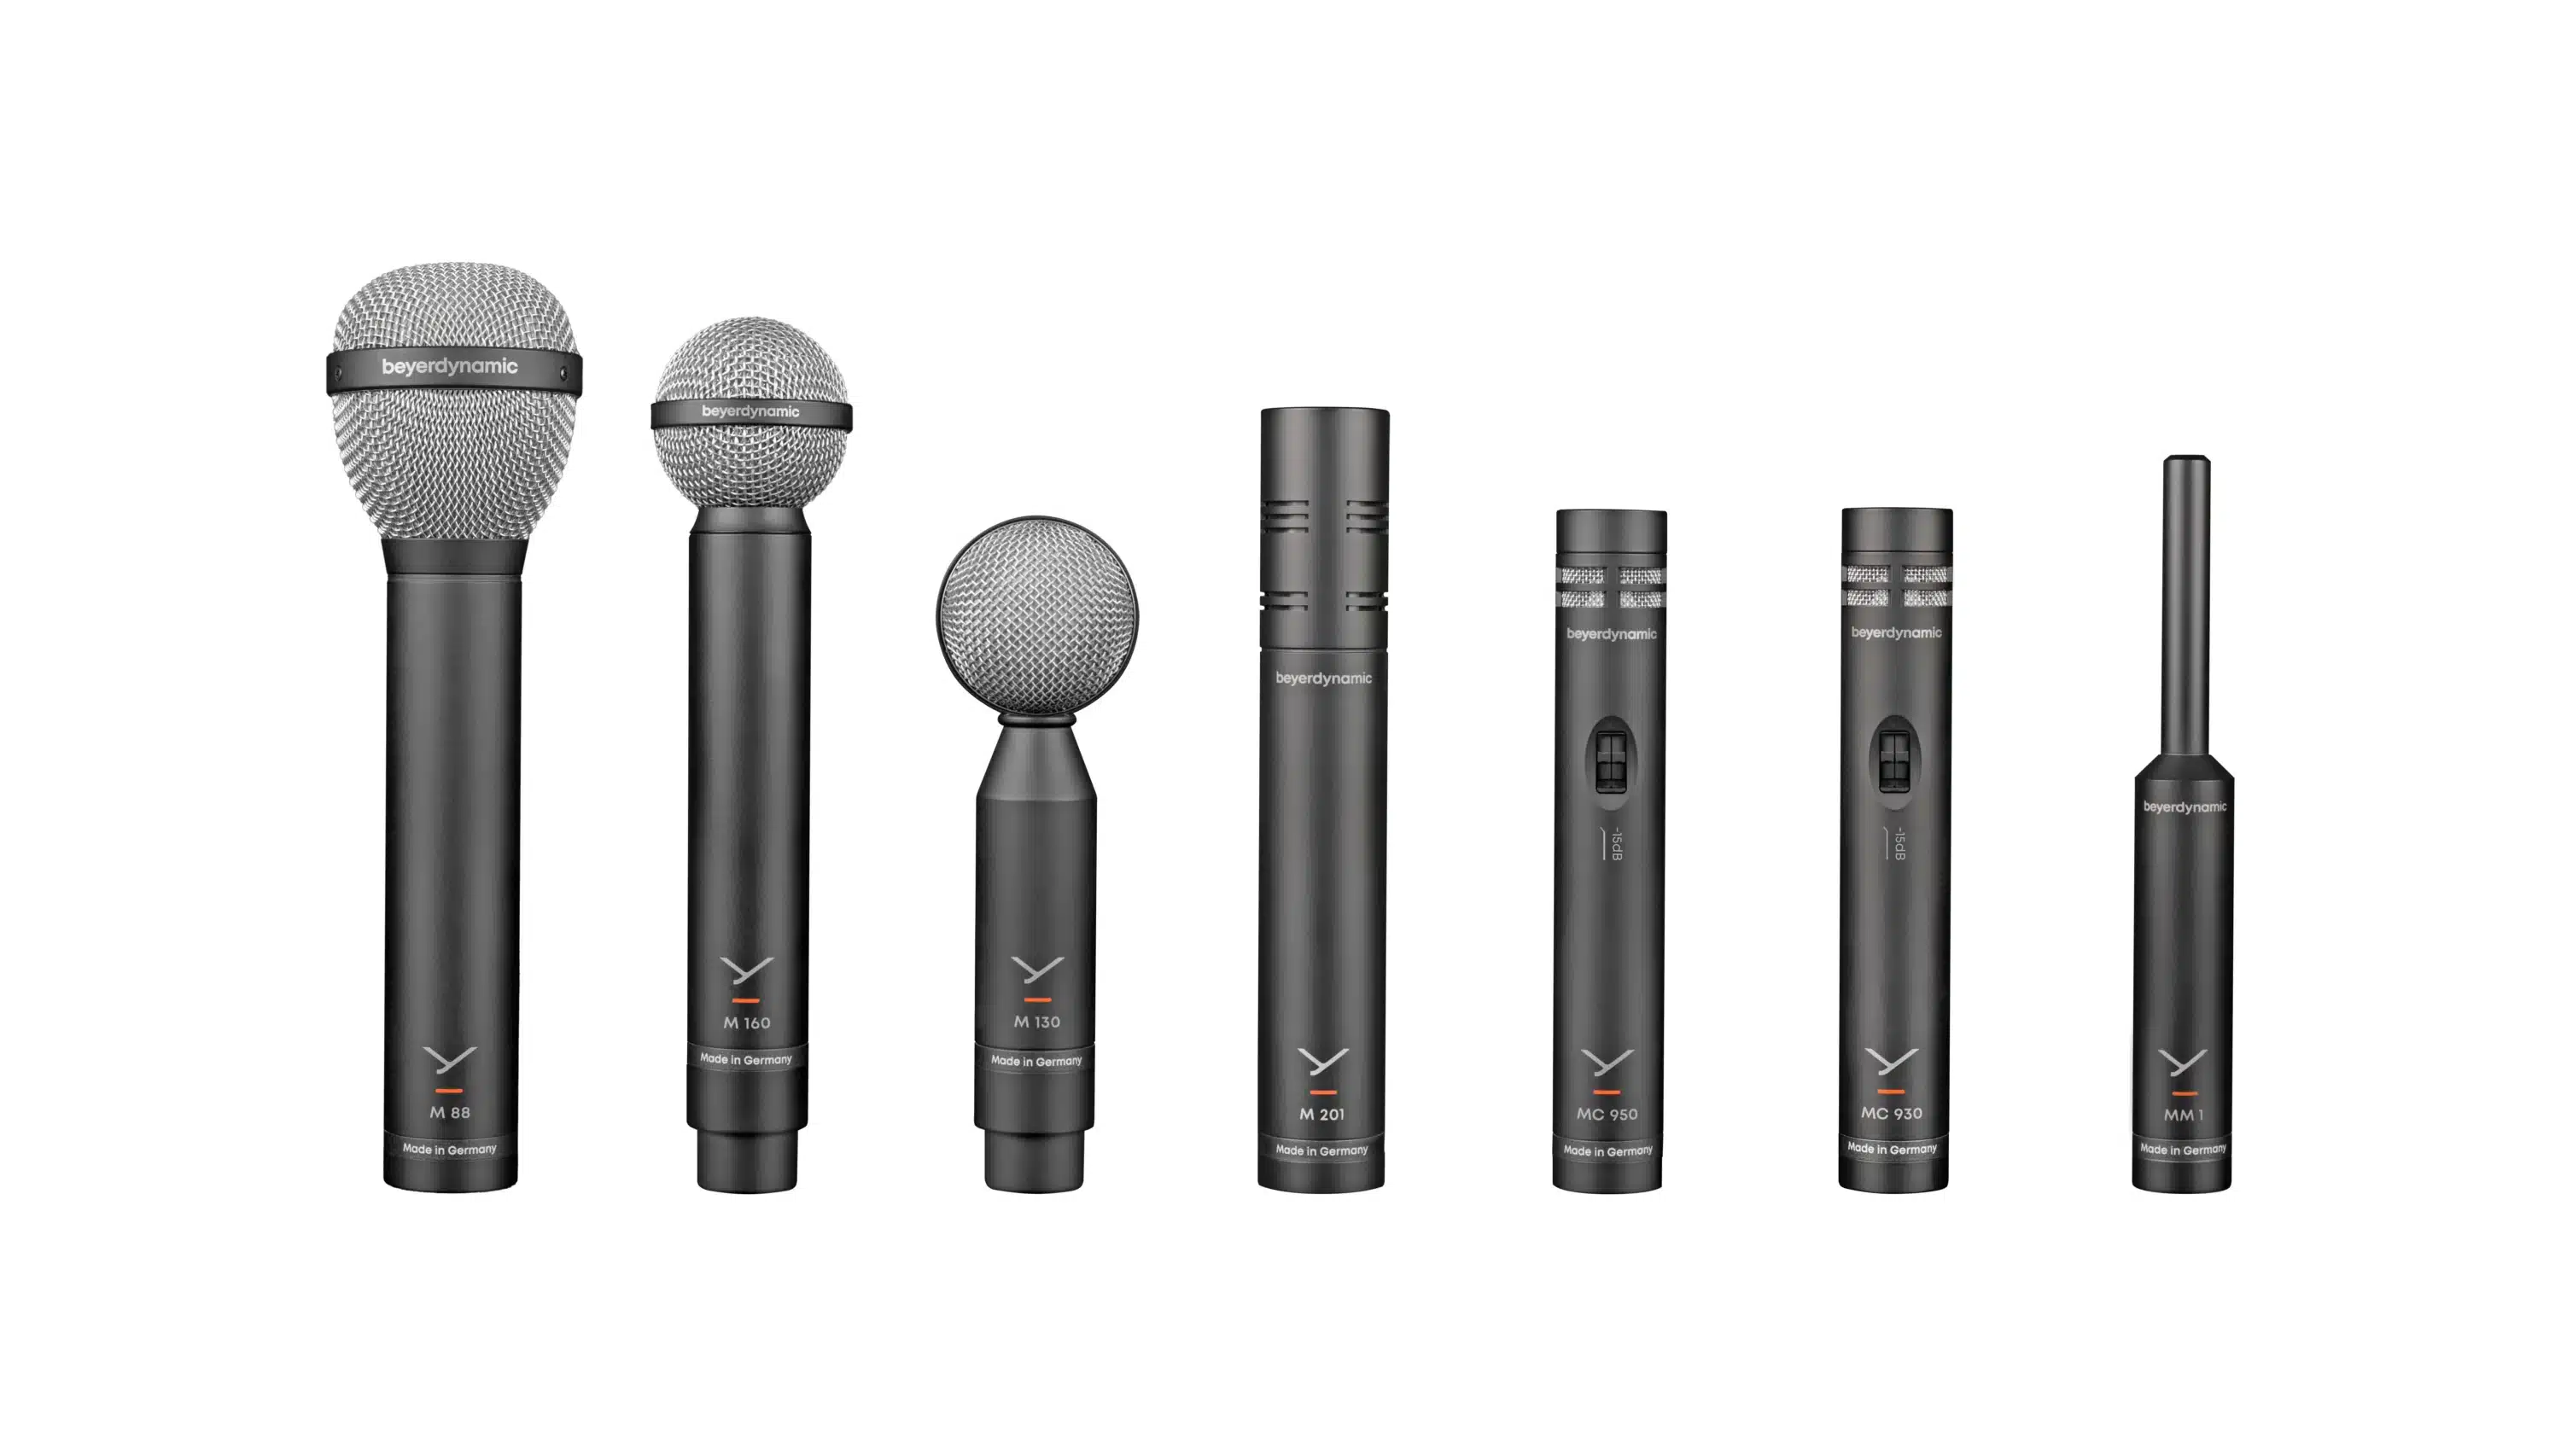 Buy microphones online - quality from beyerdynamic